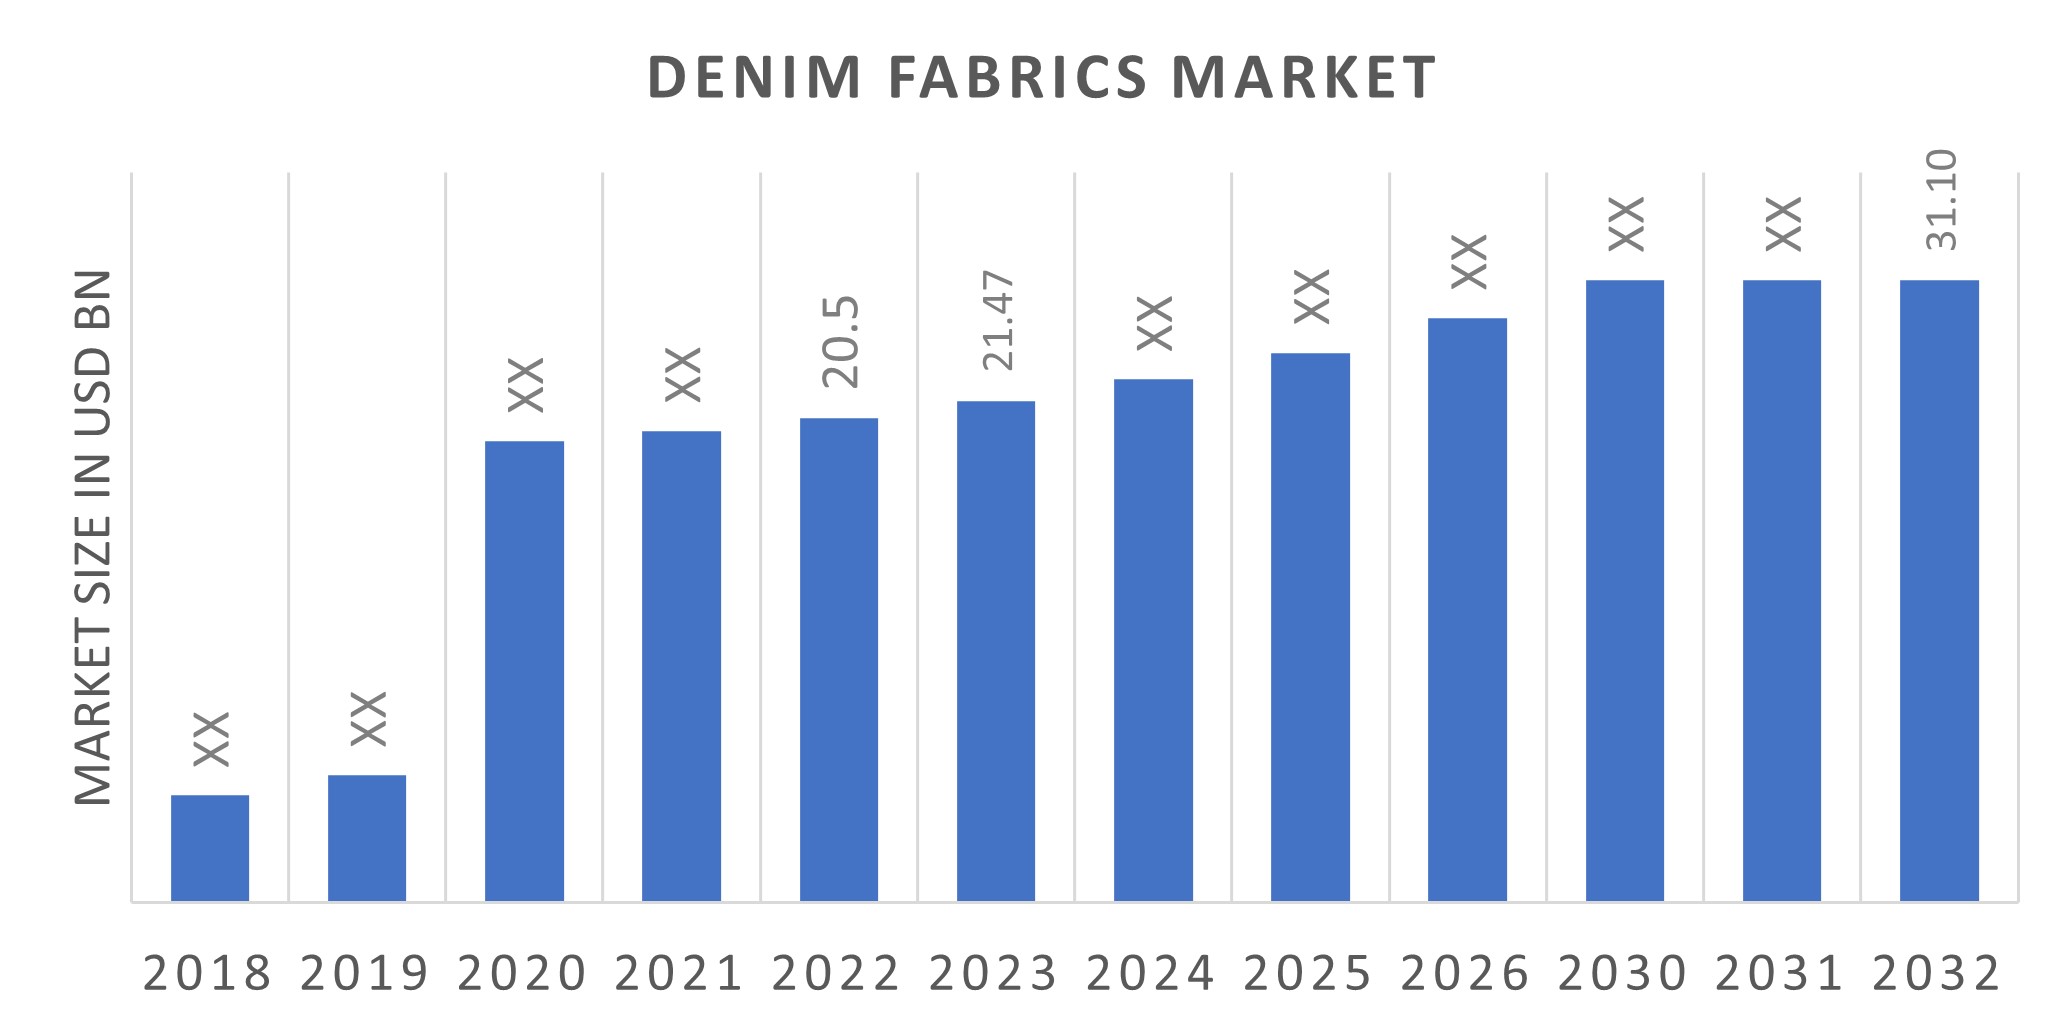 Denim Fabrics Market Size, Share, Growth | Industry Report 2032